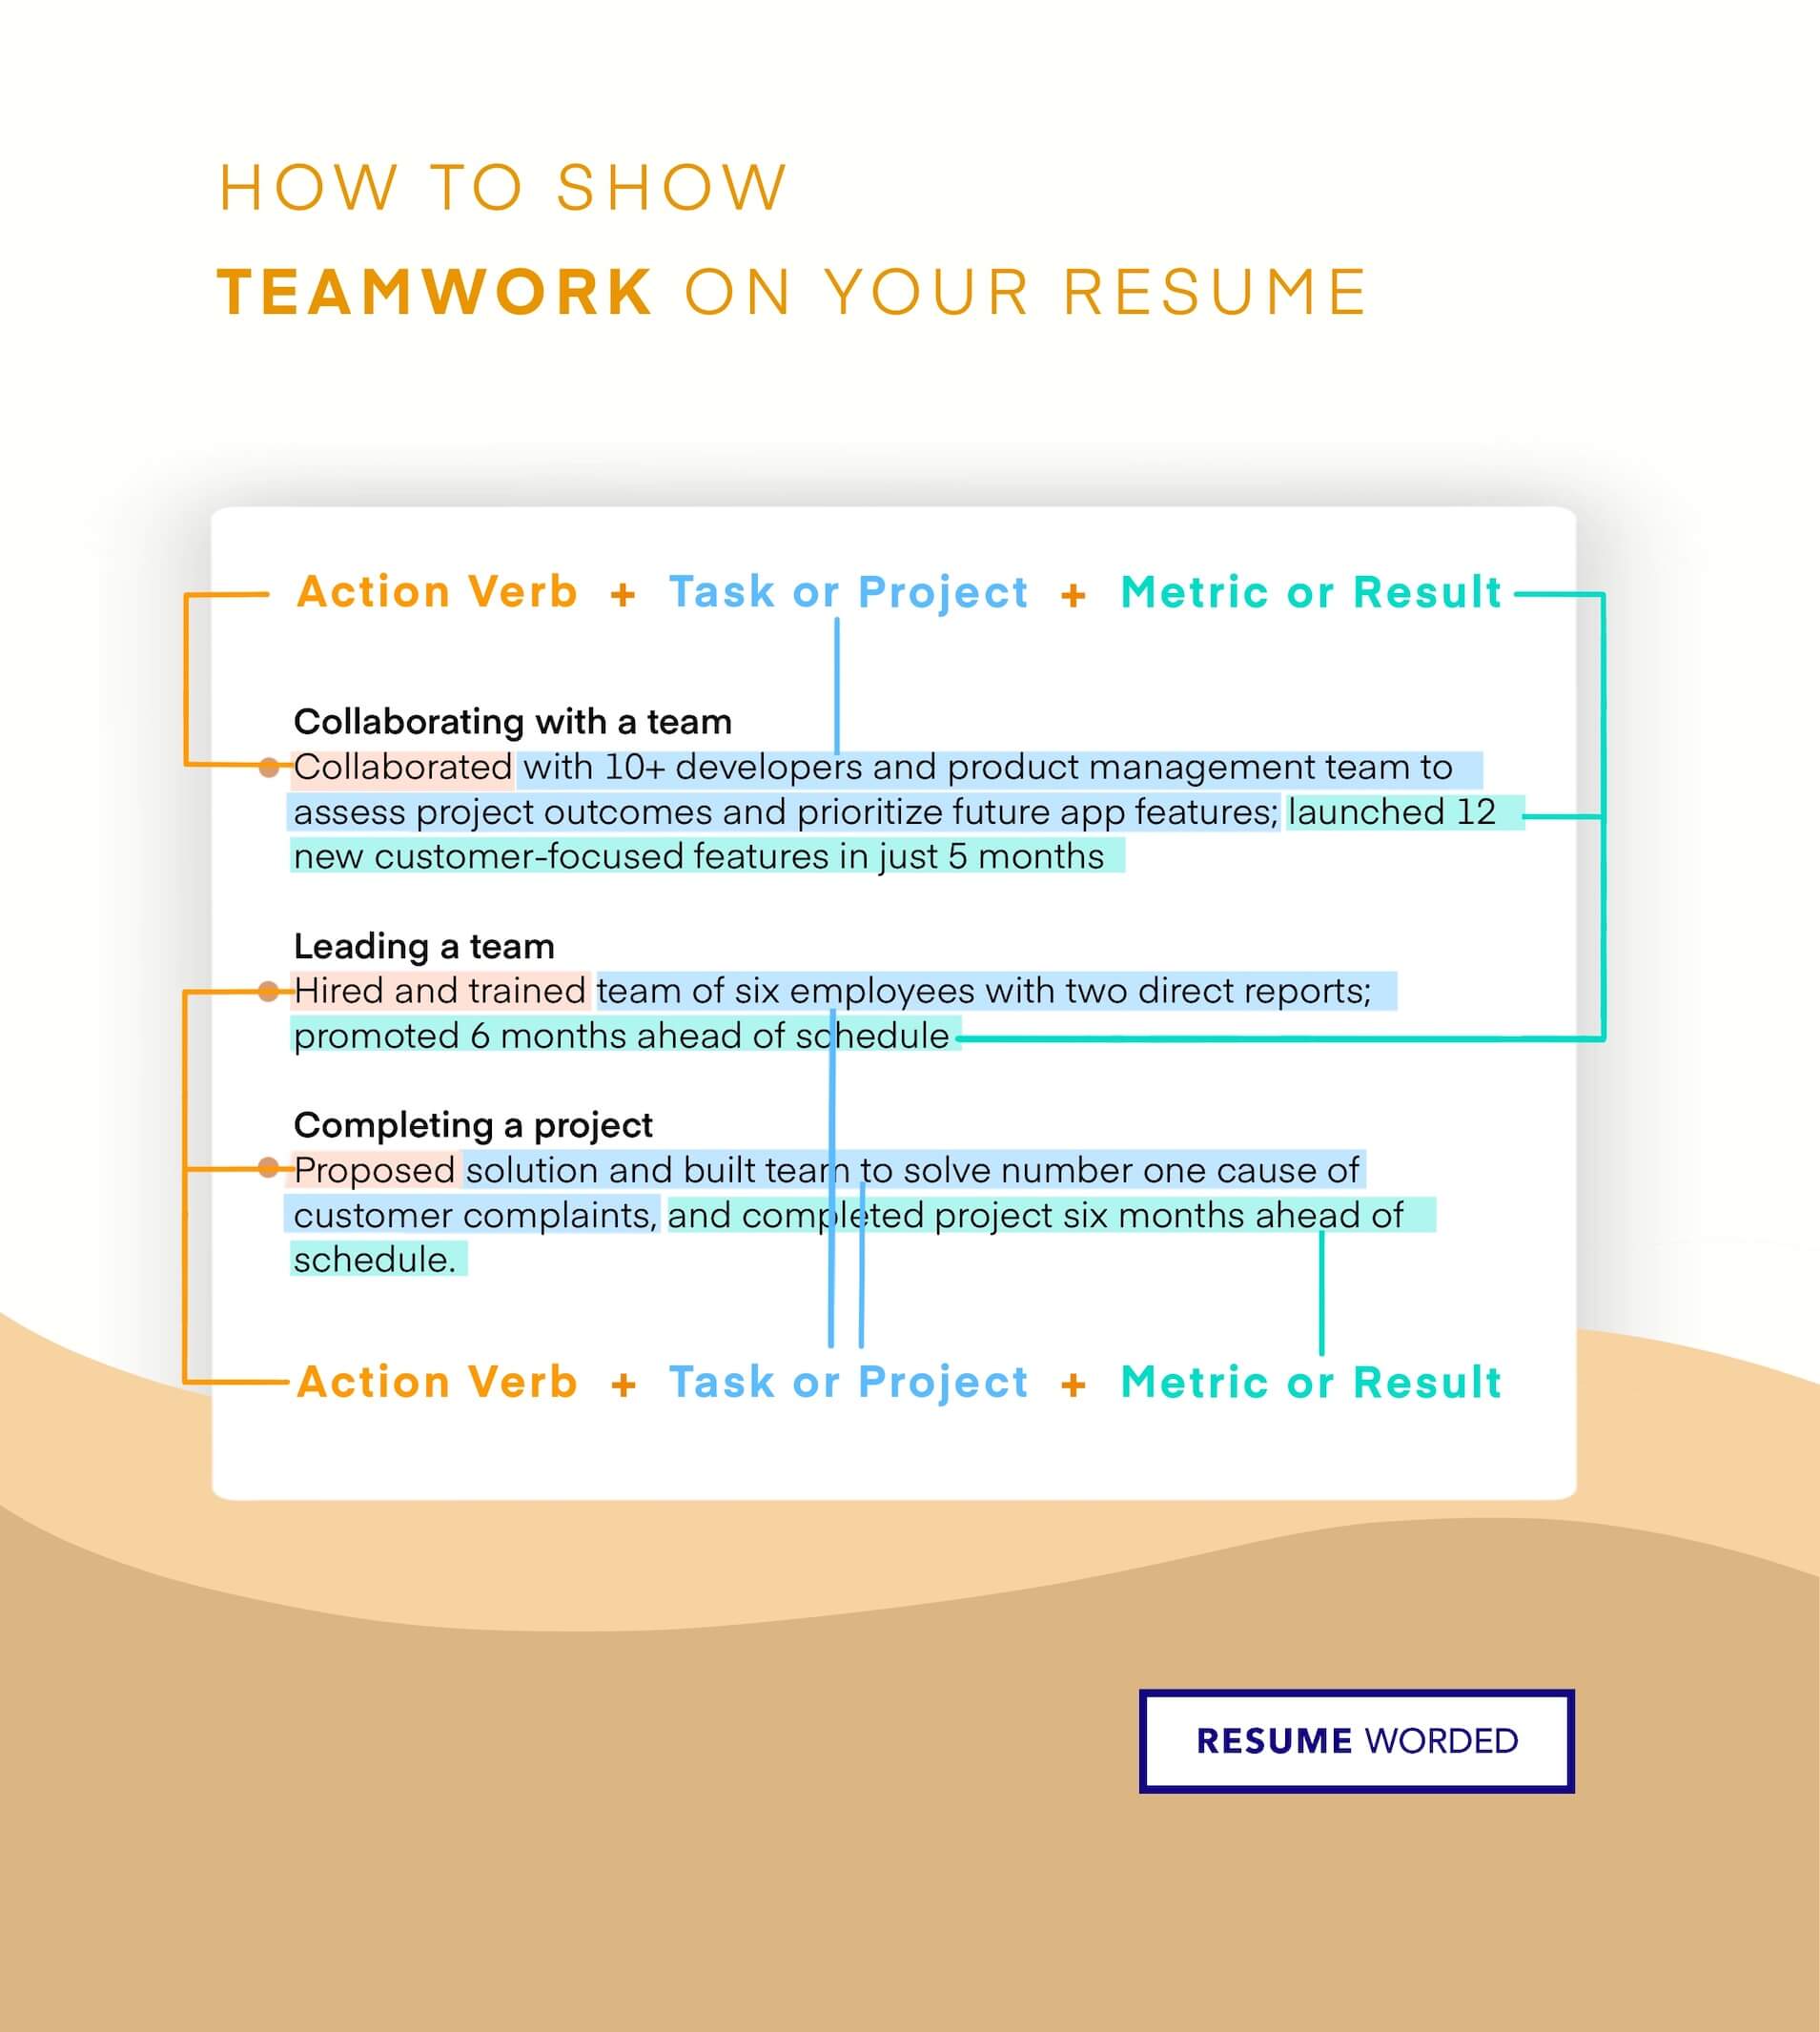 Demonstrate leadership and teamwork skills - QA (Quality Assurance) Manager Resume